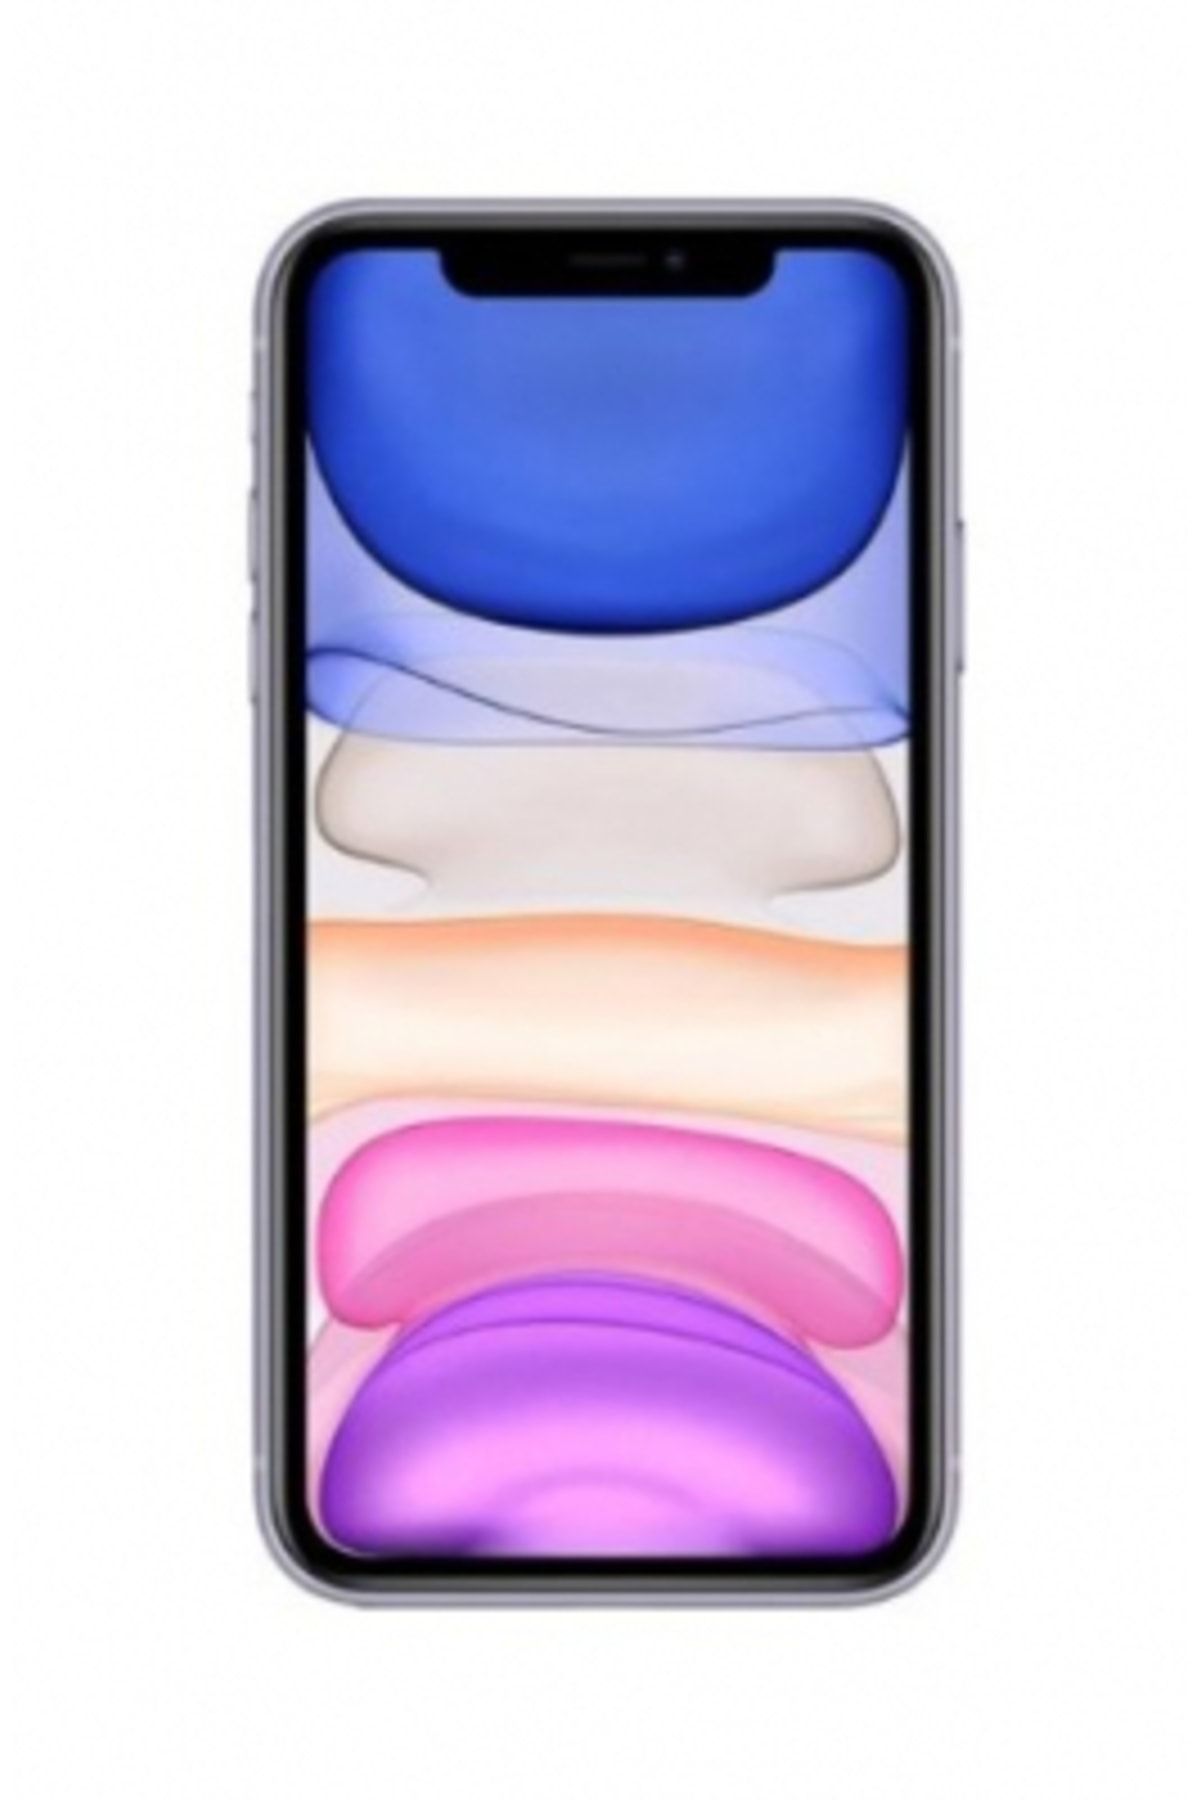 Apple Yenilenmiş iPhone 11 64 GB Purple Cep Telefonu (12 Ay Garantili) - B Kalite